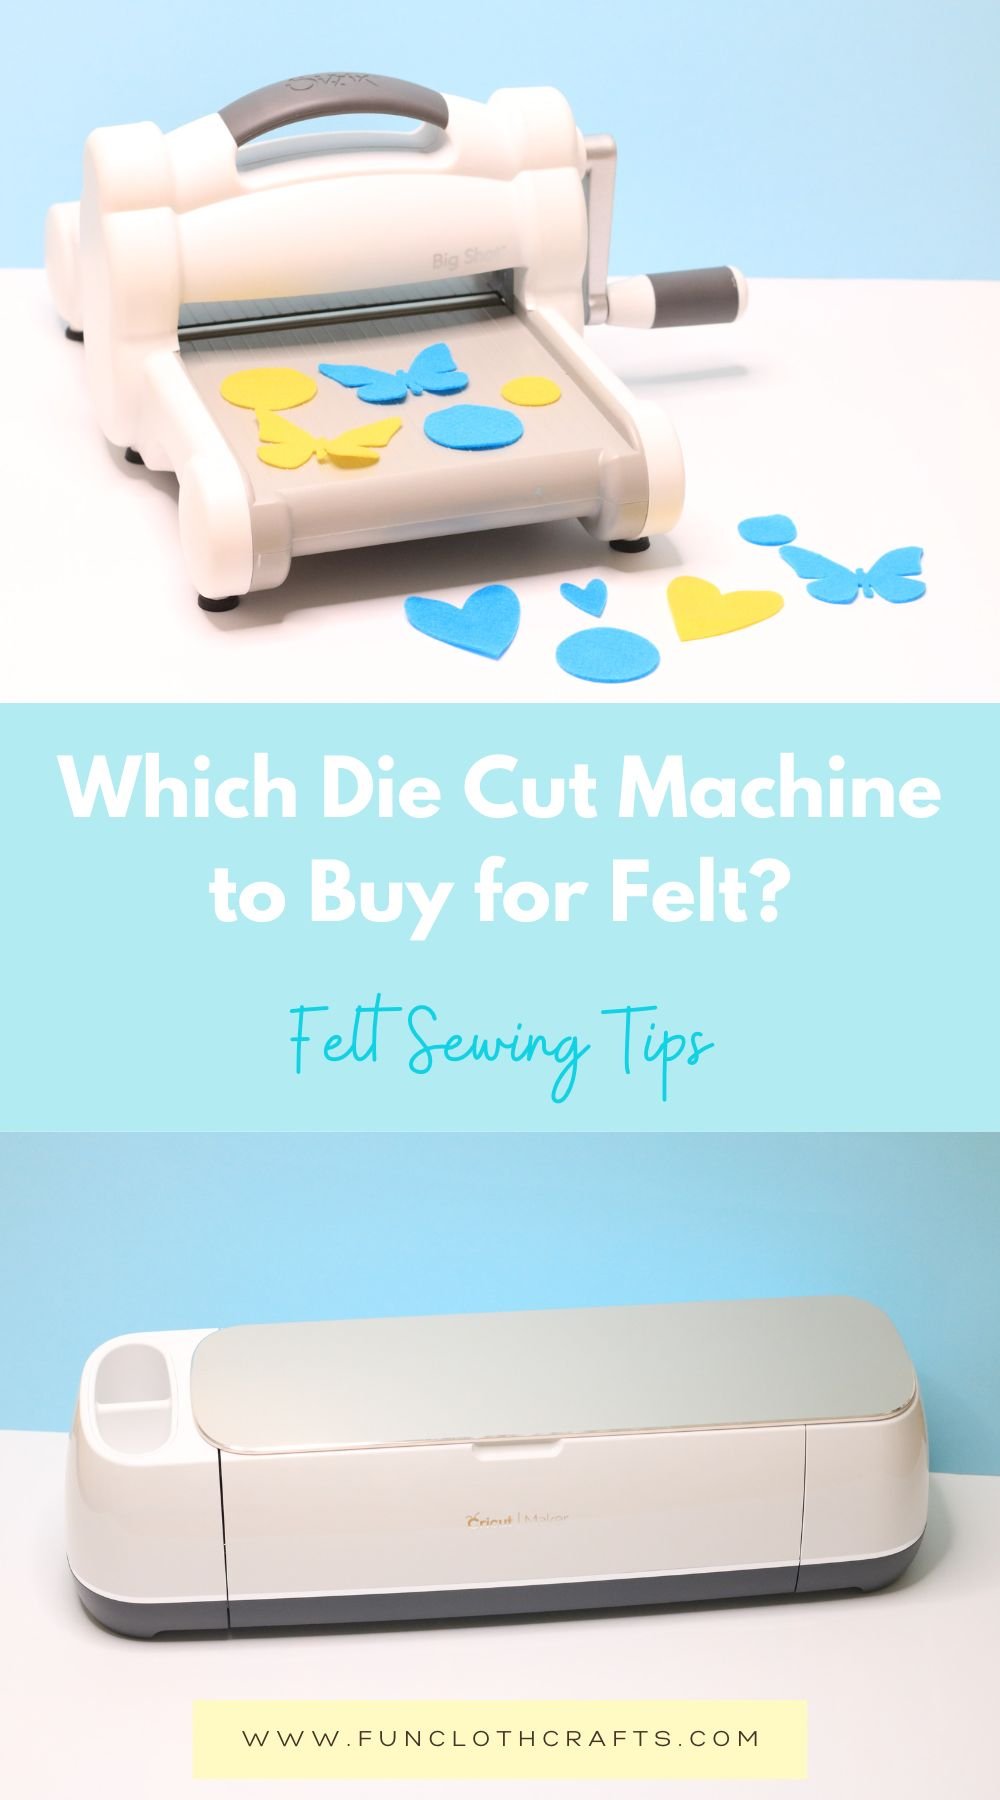 Which Die Cutting Machine Should I Buy For Felt?